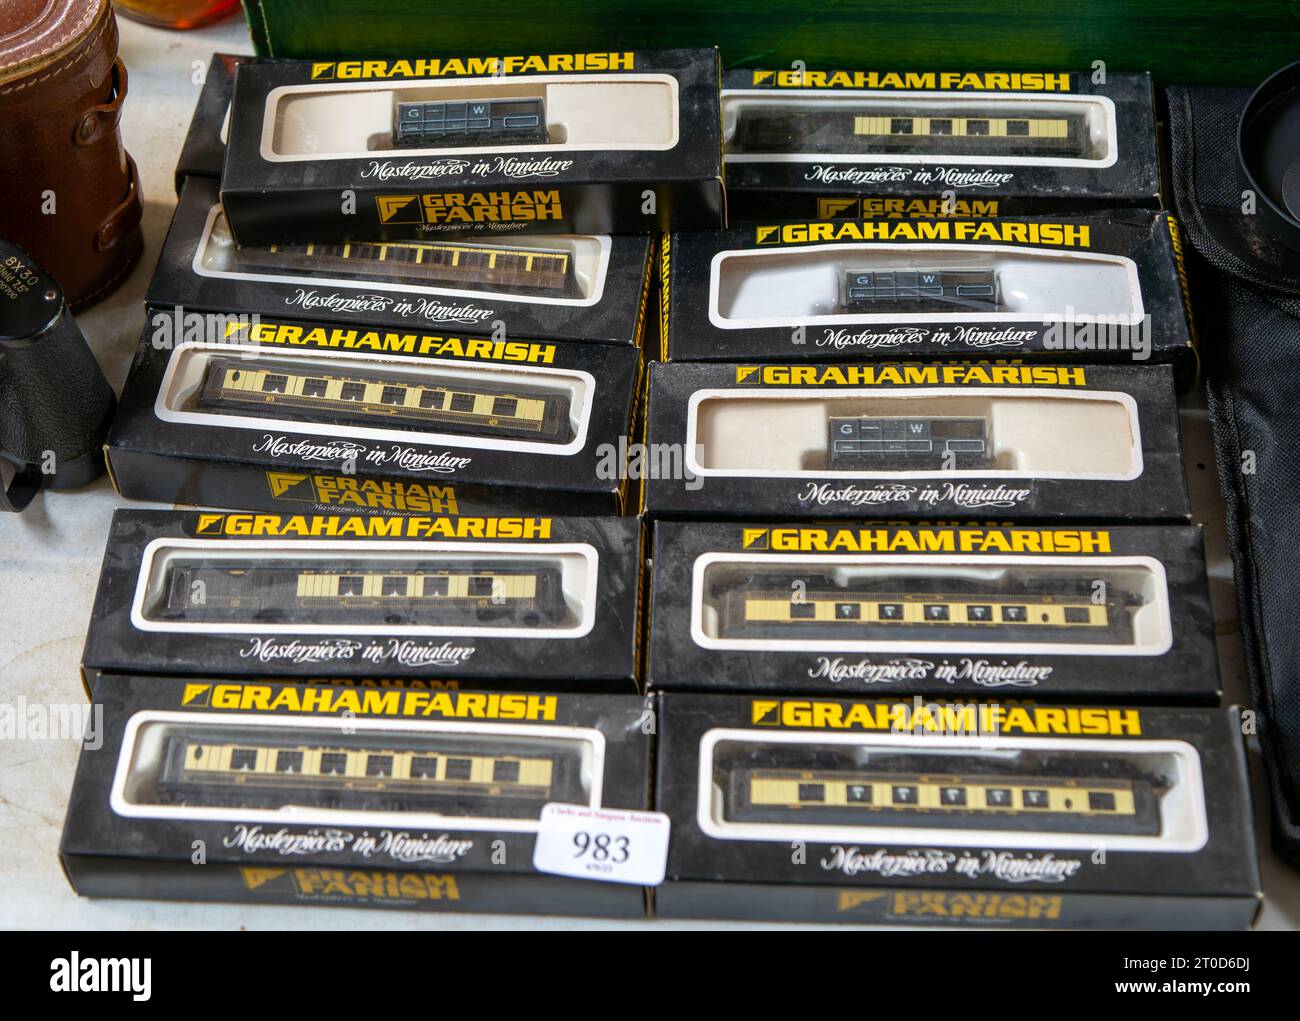 Graham Farish train set boxes on sale at auction Stock Photo